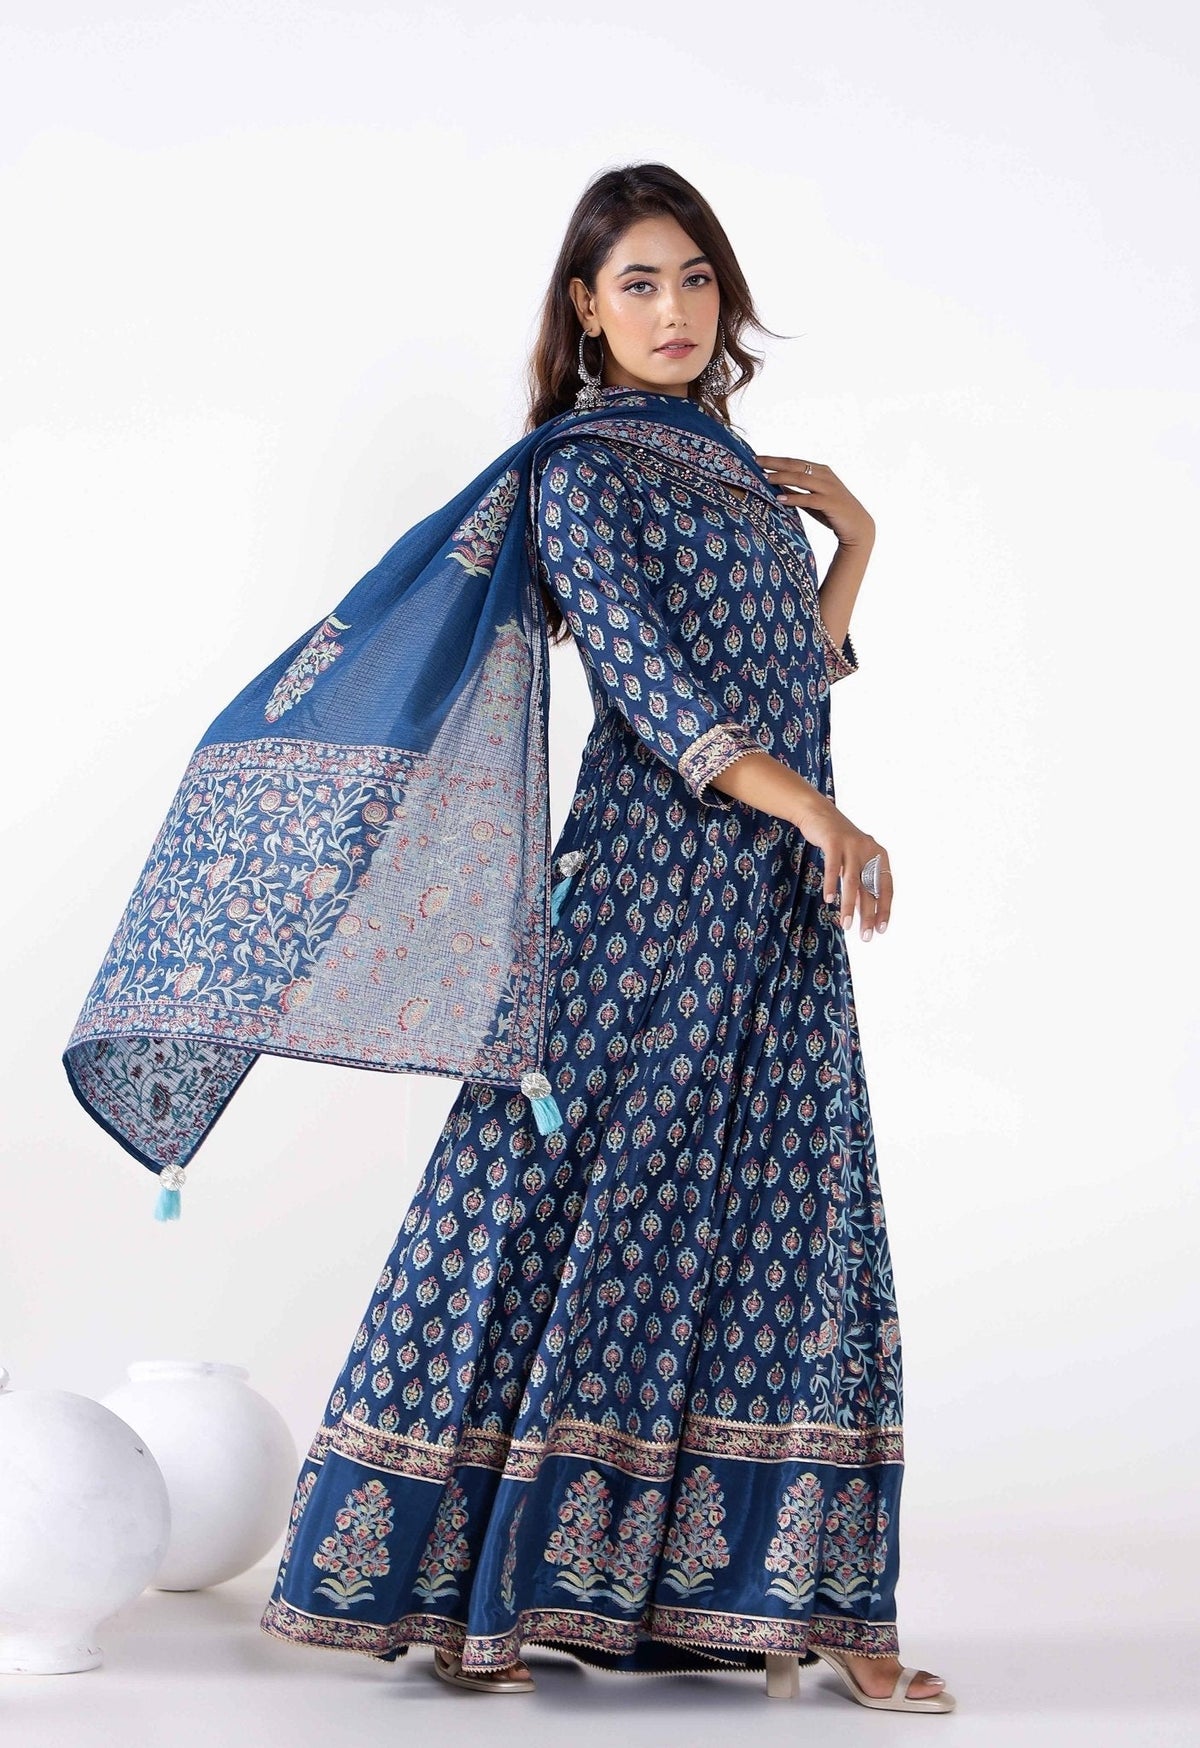 Floral Buti Printed long Anarkali dress With Pants and Printed Doriya Dupatta (3pc Set) - Tara-C-Tara